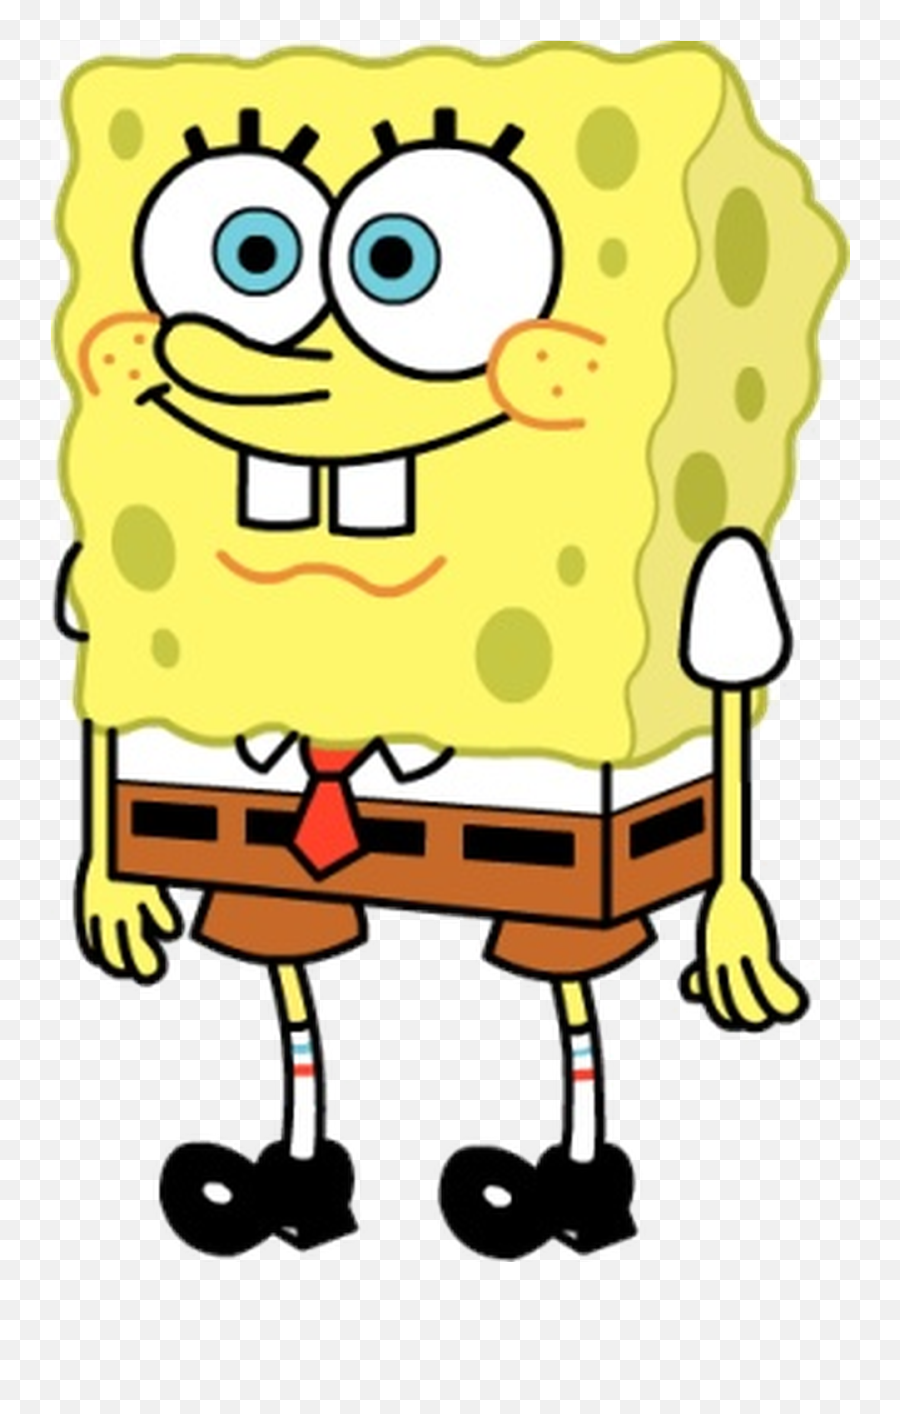 Pictures Of Spongebob Squarepants 2 Opulent Ideas Are Emoji,Spongebob Face Png